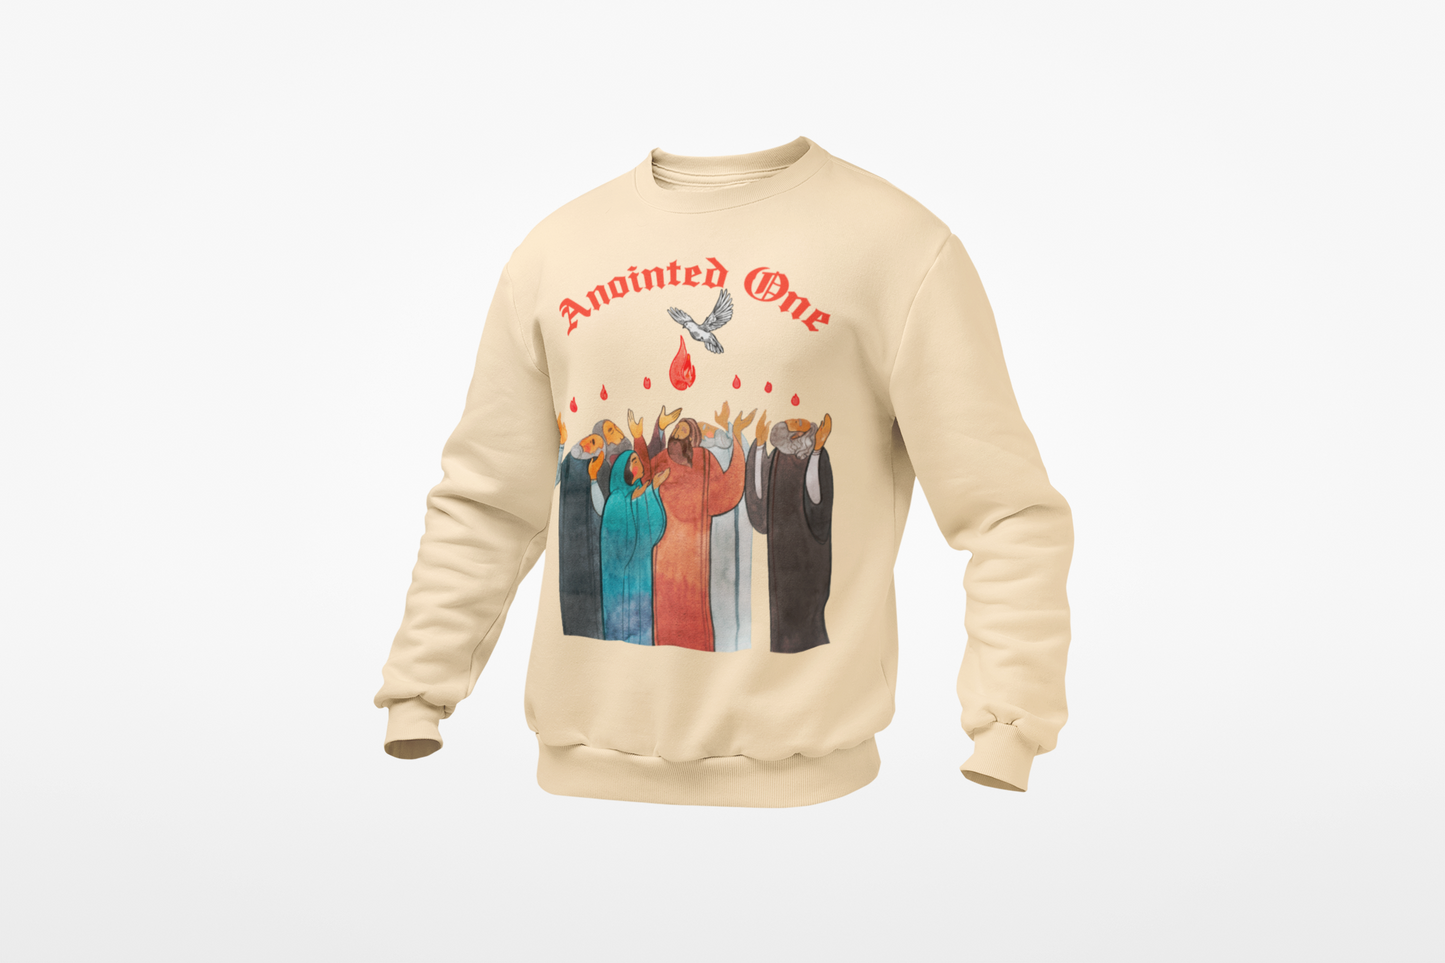 Anointed one  Sweatshirt